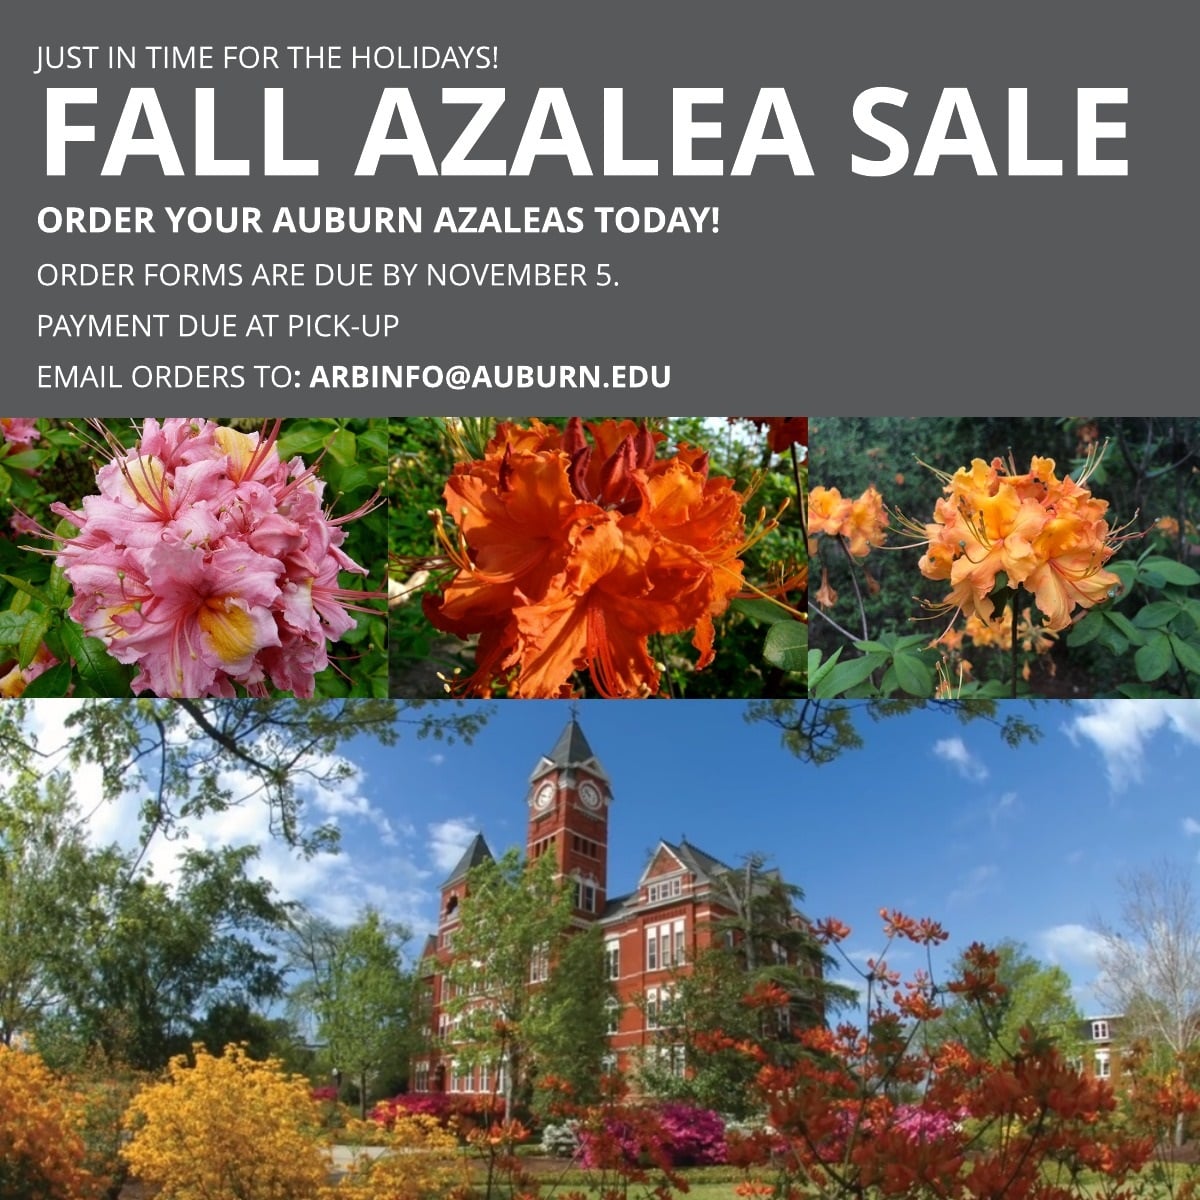 Auburn's fall azalea sale